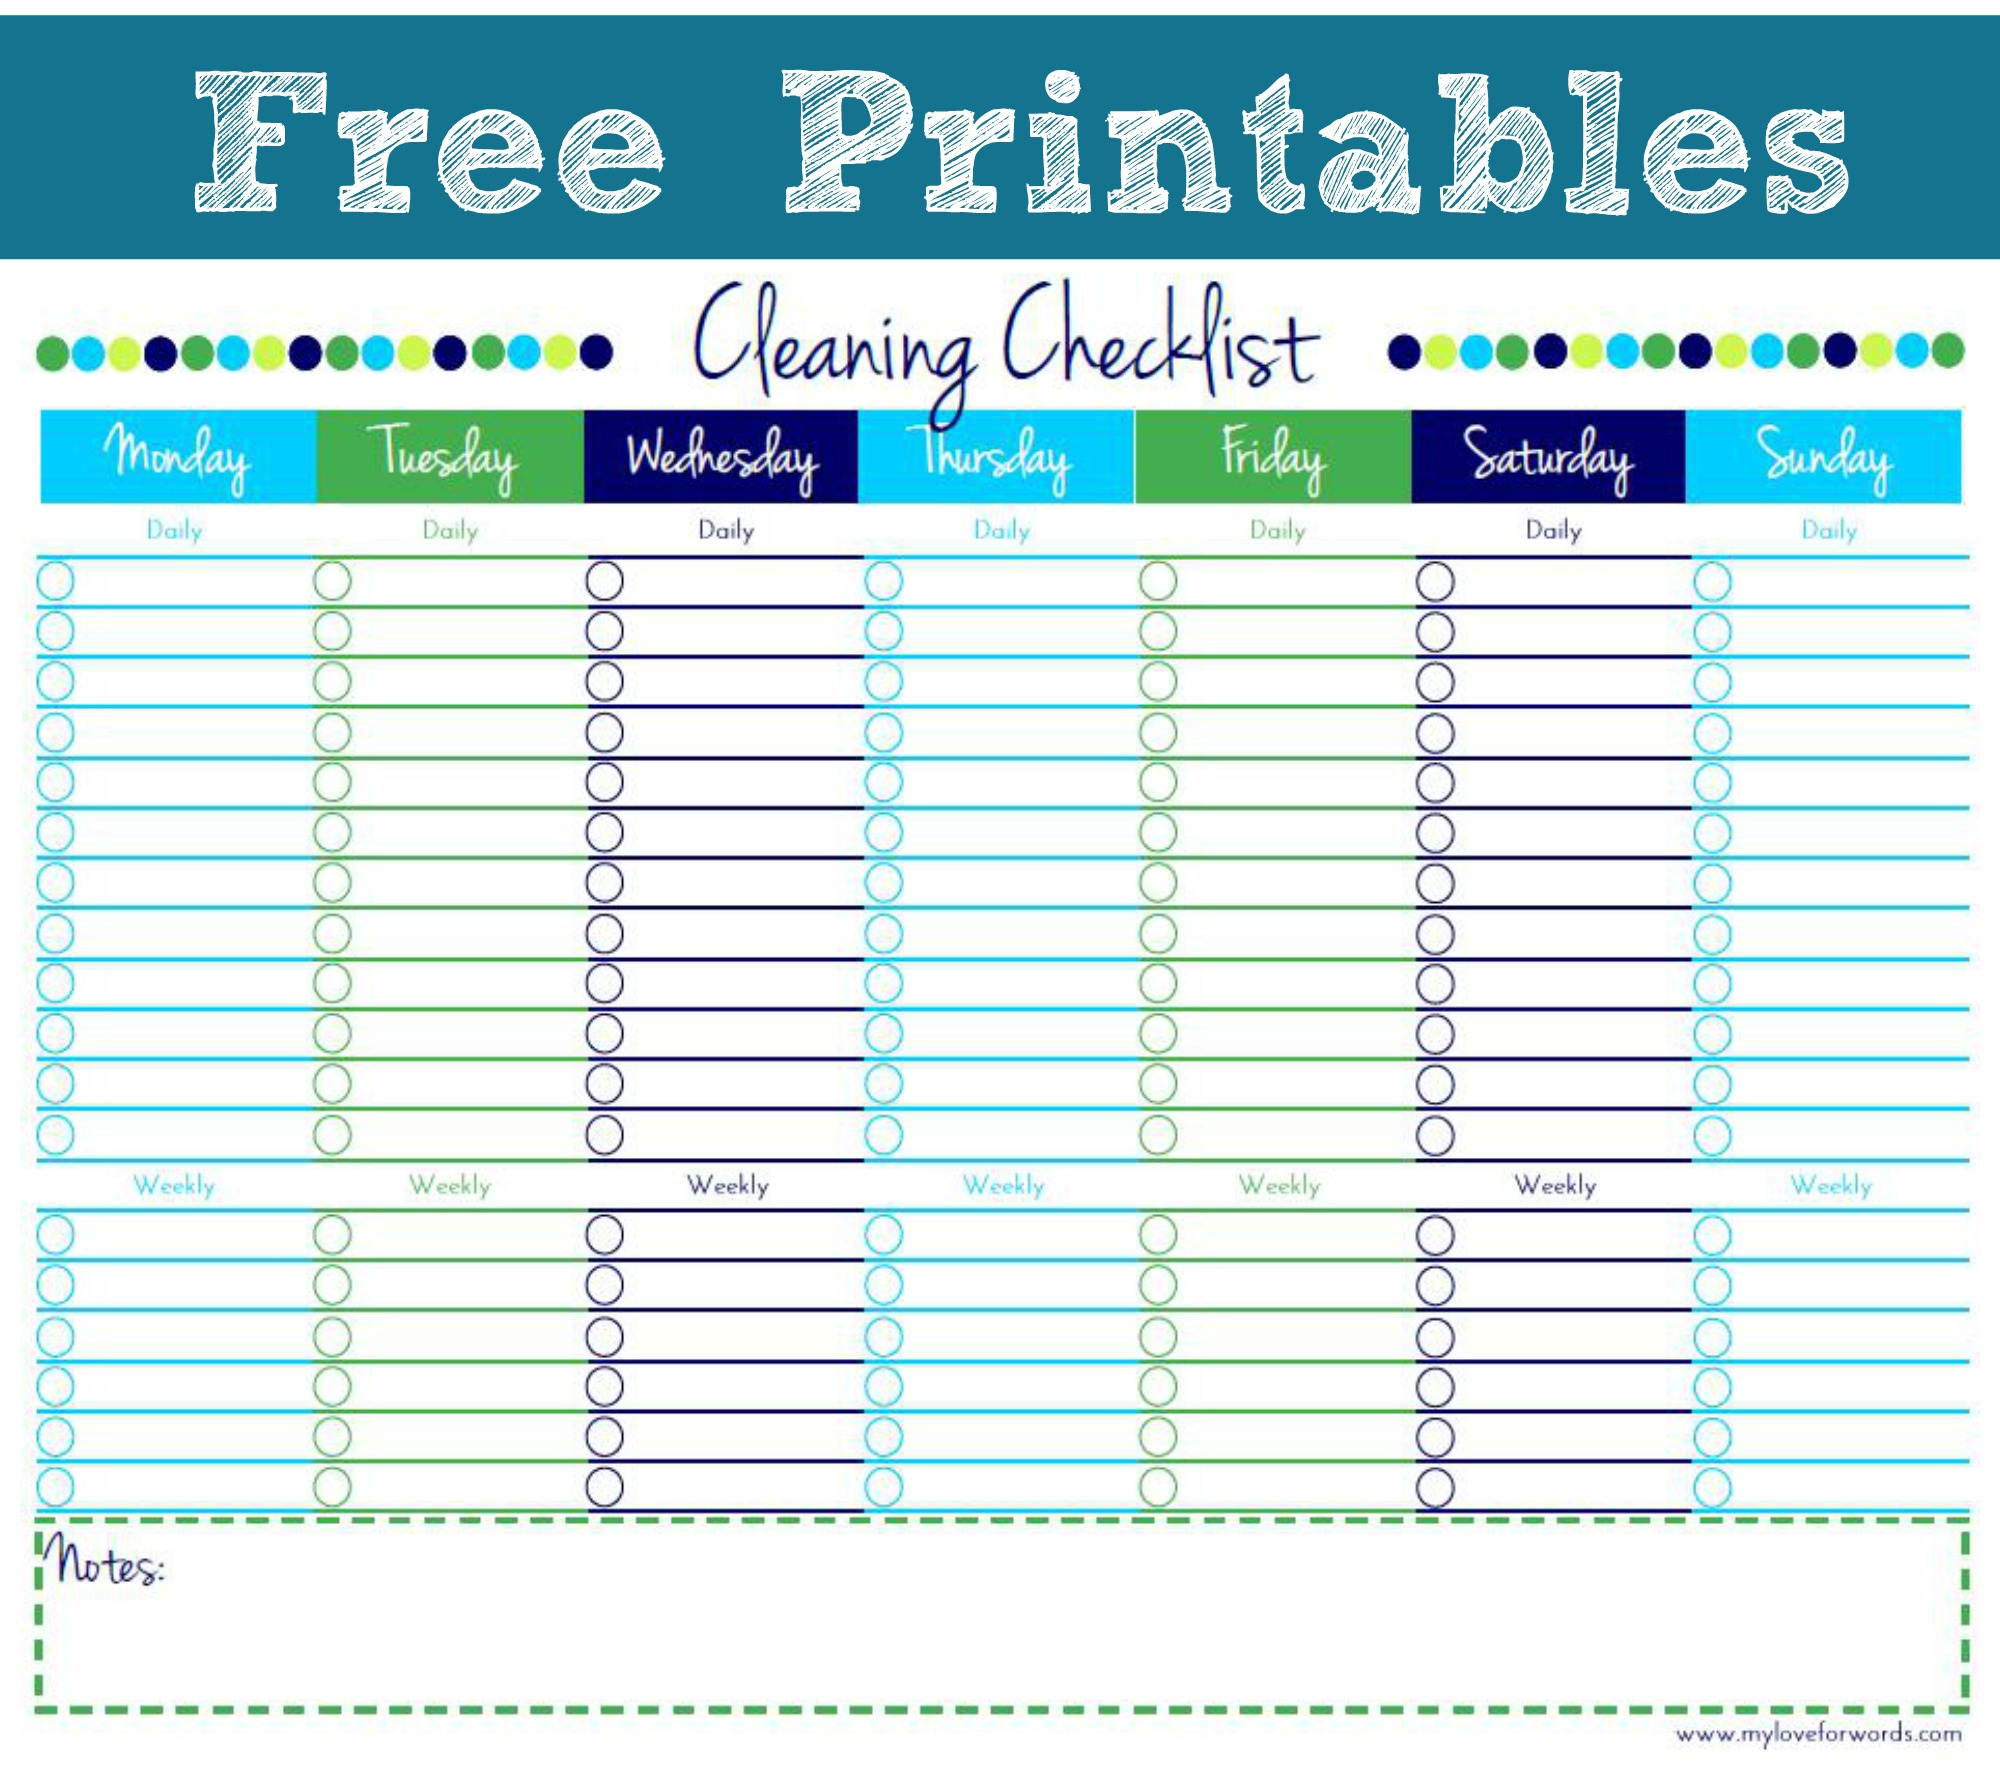 Cleaning Checklist {Free Printable} - Free Printable Checklist